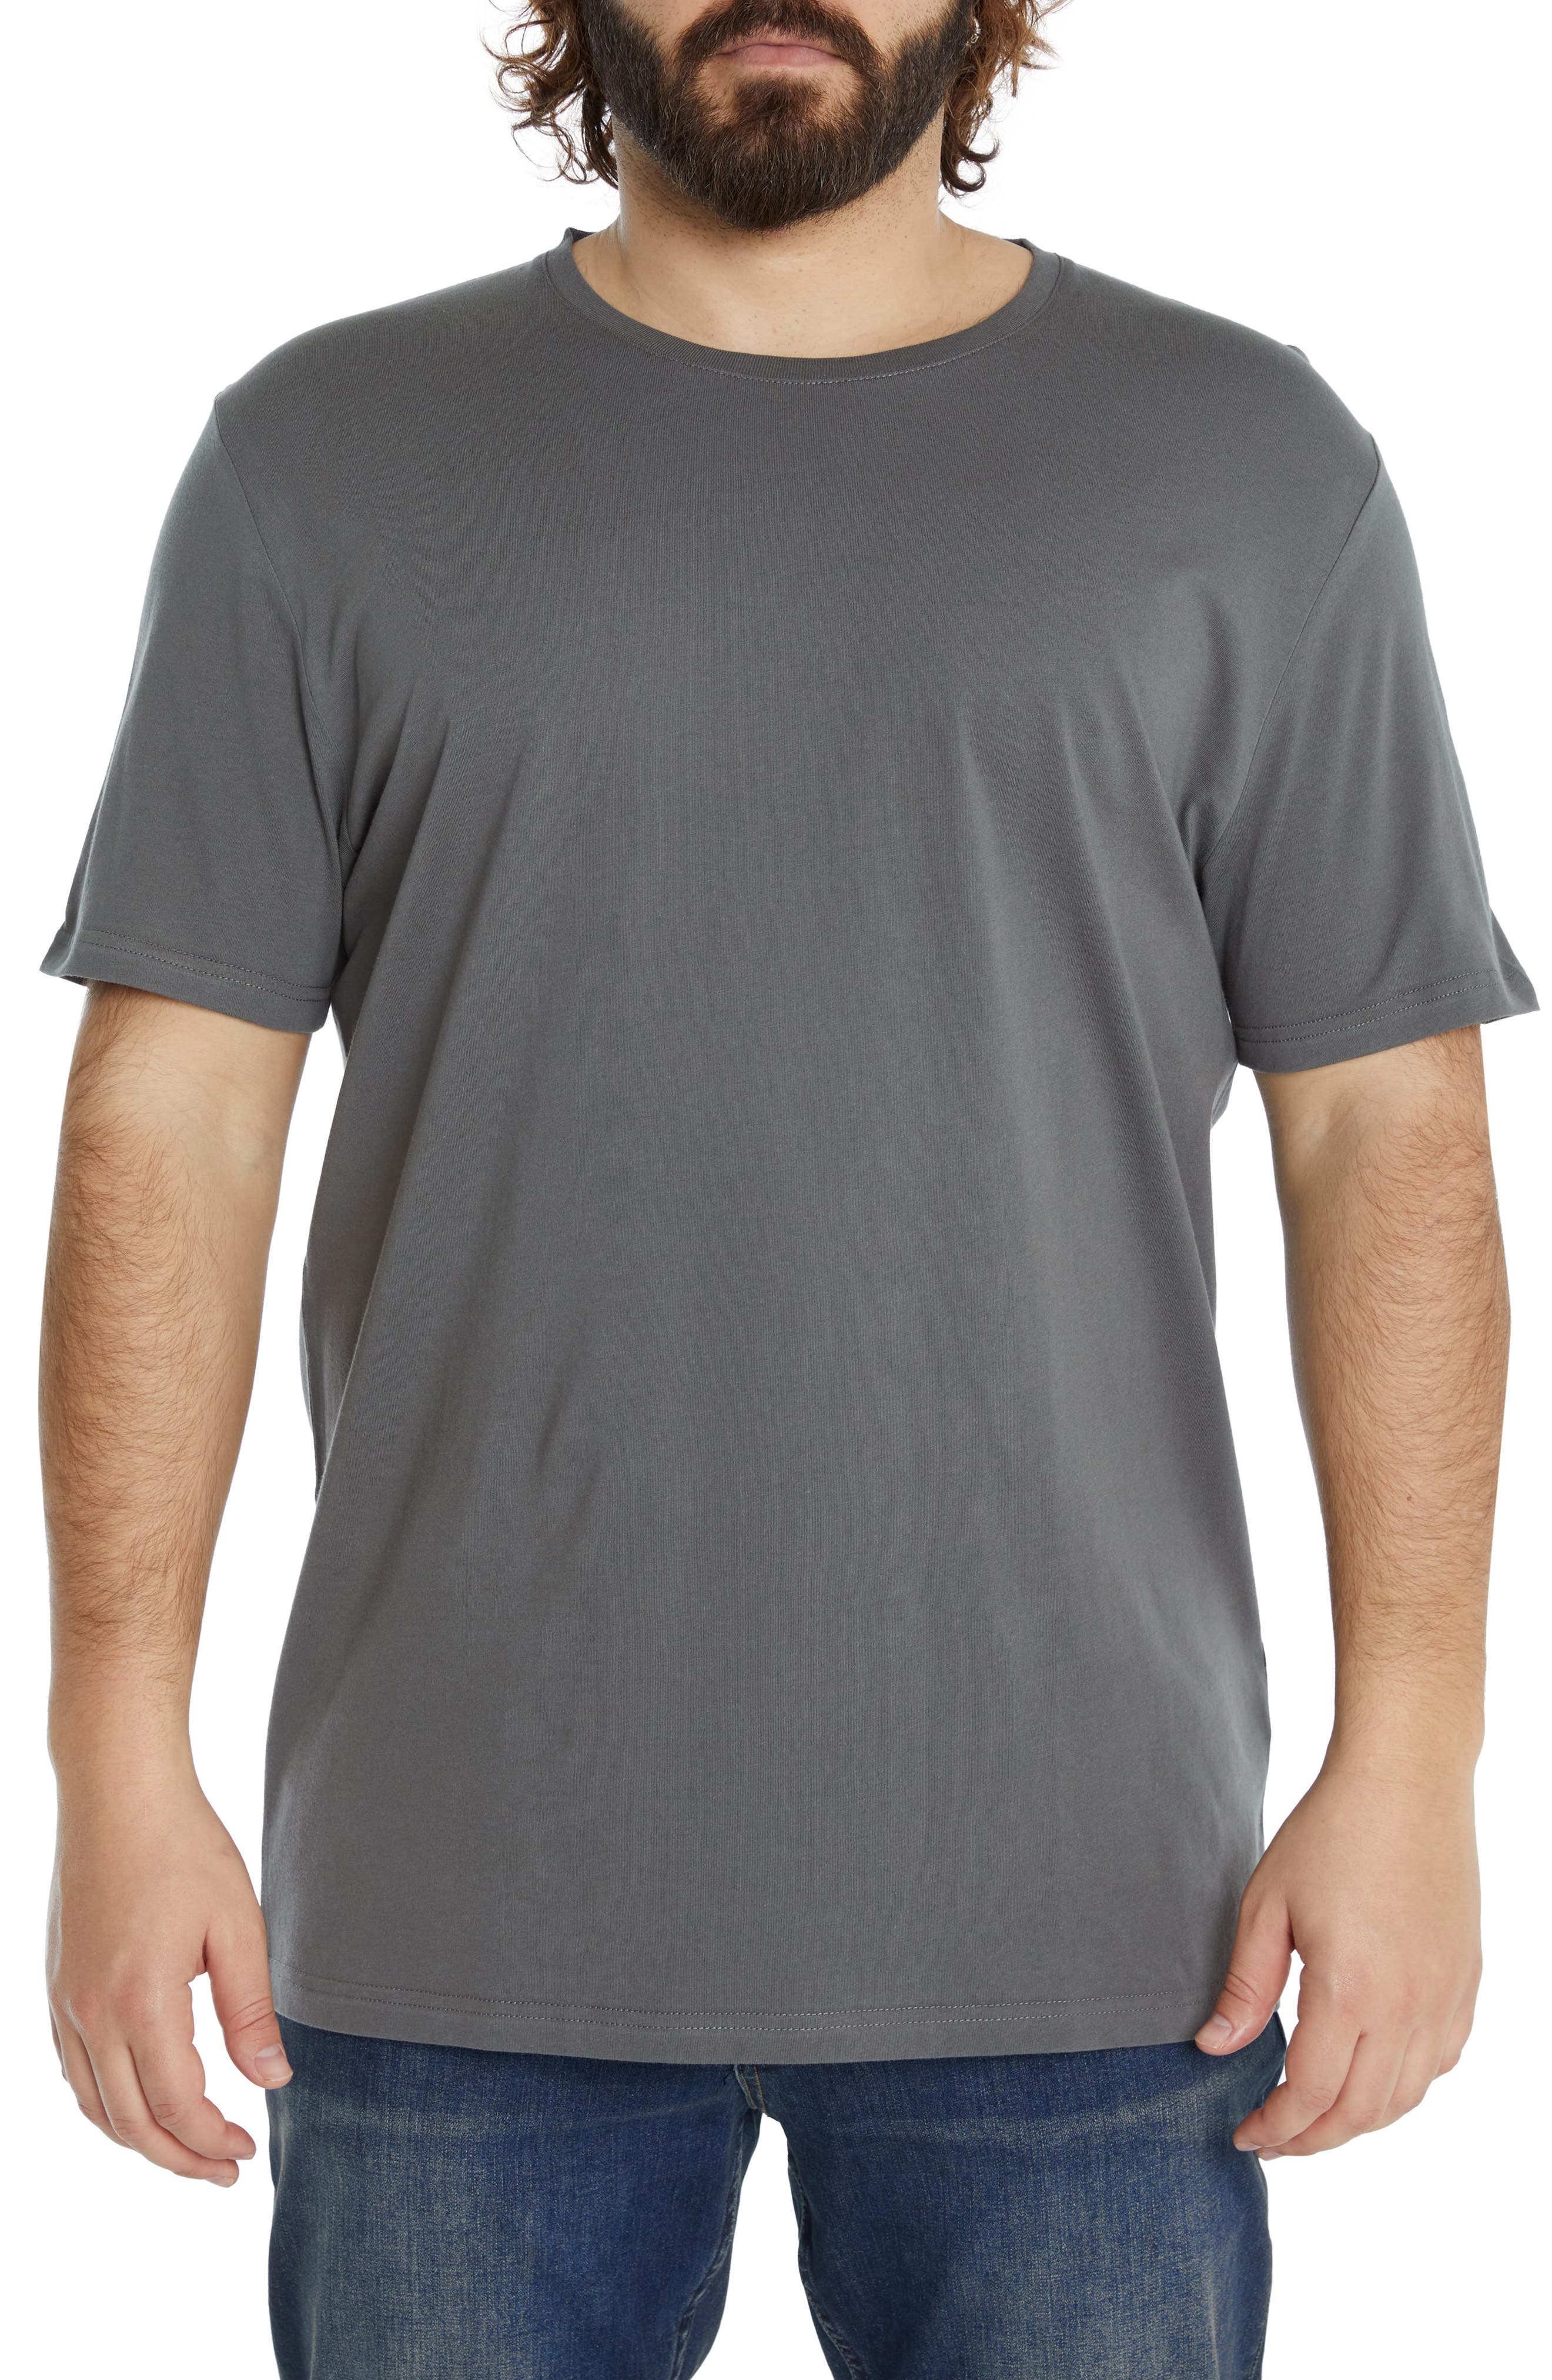 Johnny Bigg Essential Longline T-Shirt in Khaki at Nordstrom